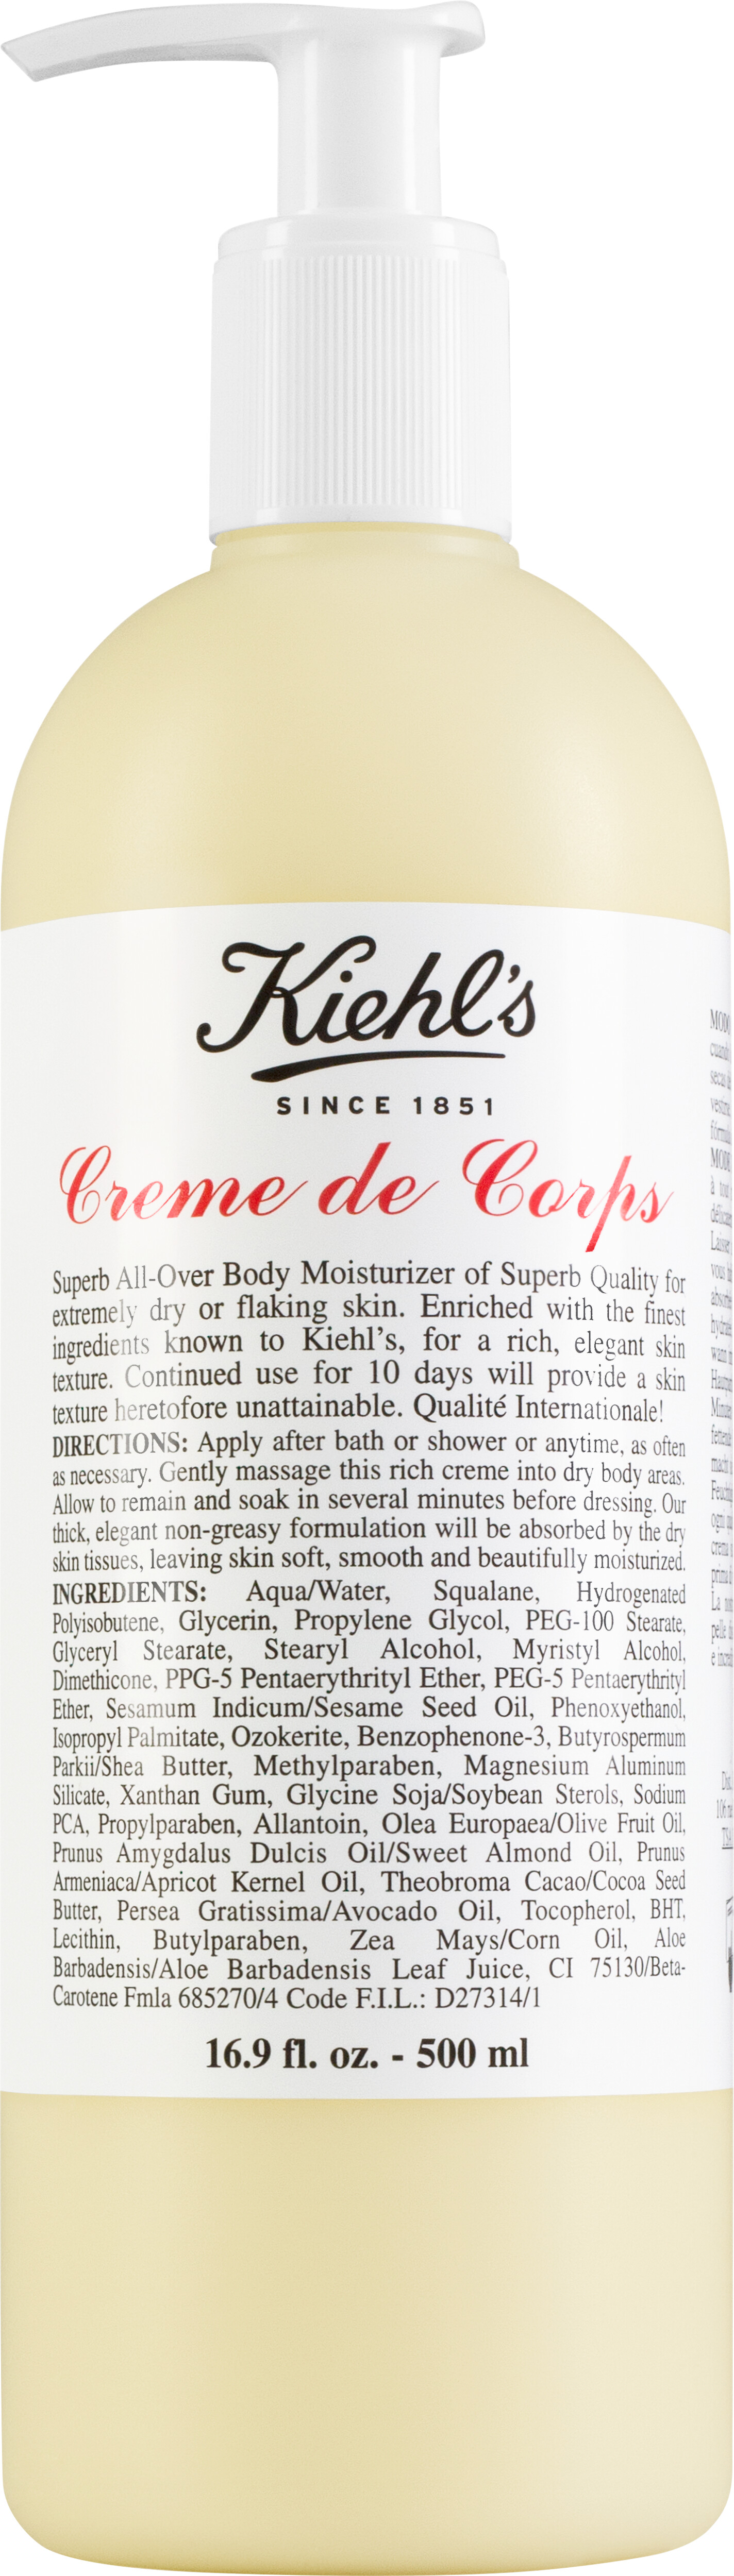 Kiehl's Creme de Corps All-Over Body Moisturiser 500ml